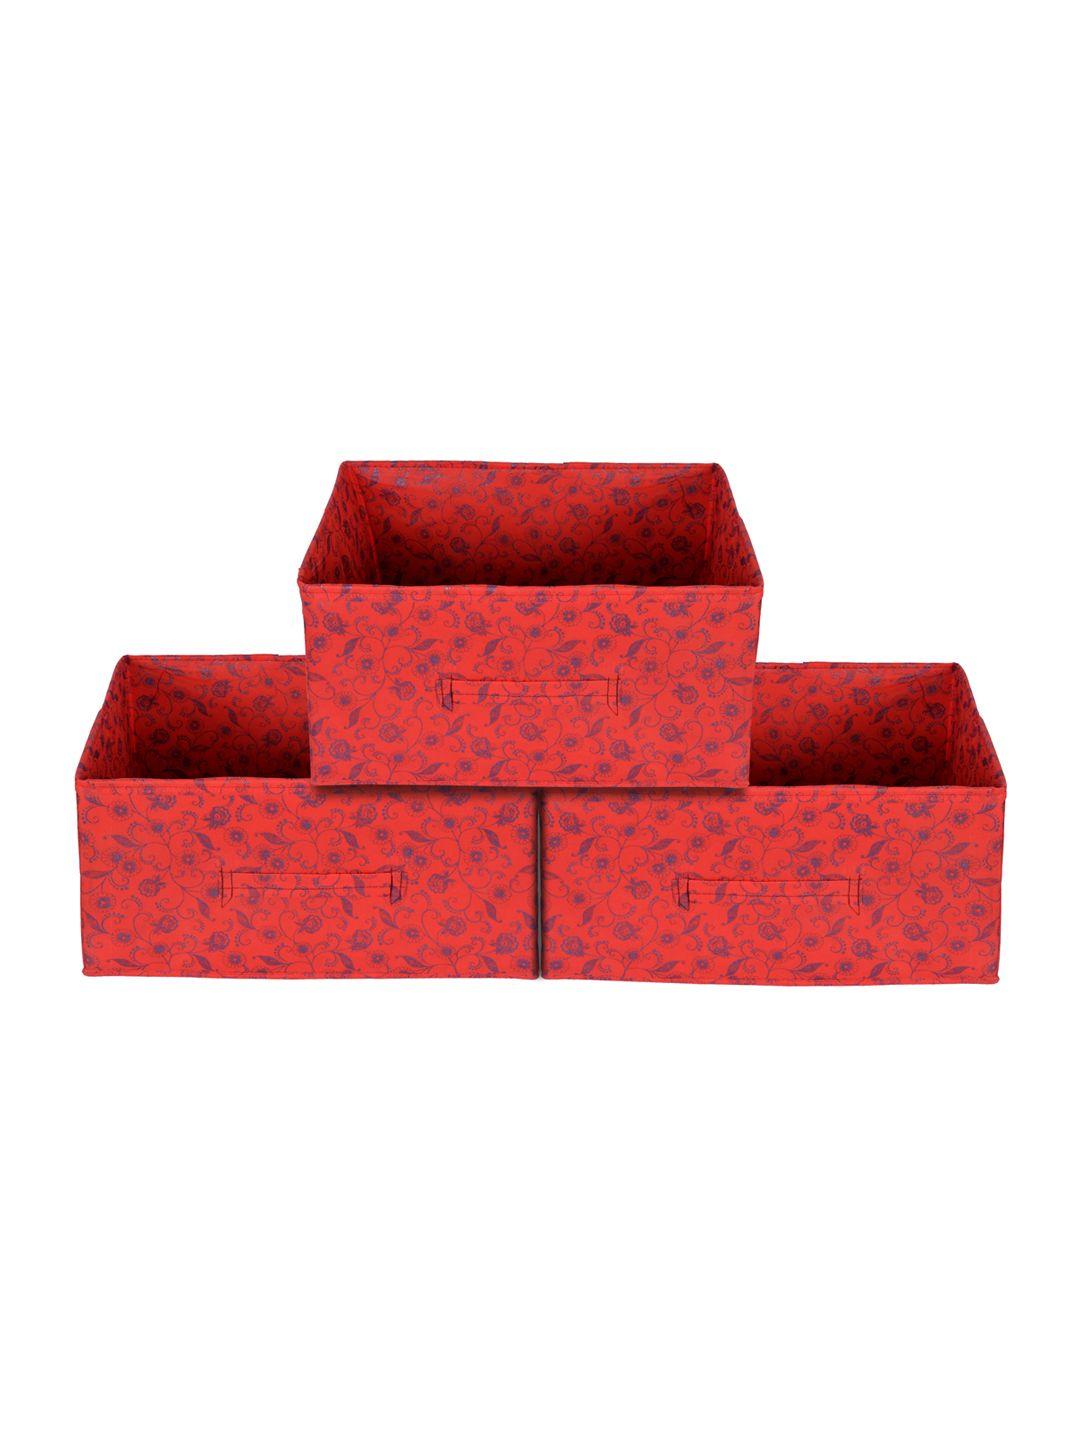 kuber industries set of 3 red metallic floral printed drawer storage organizers